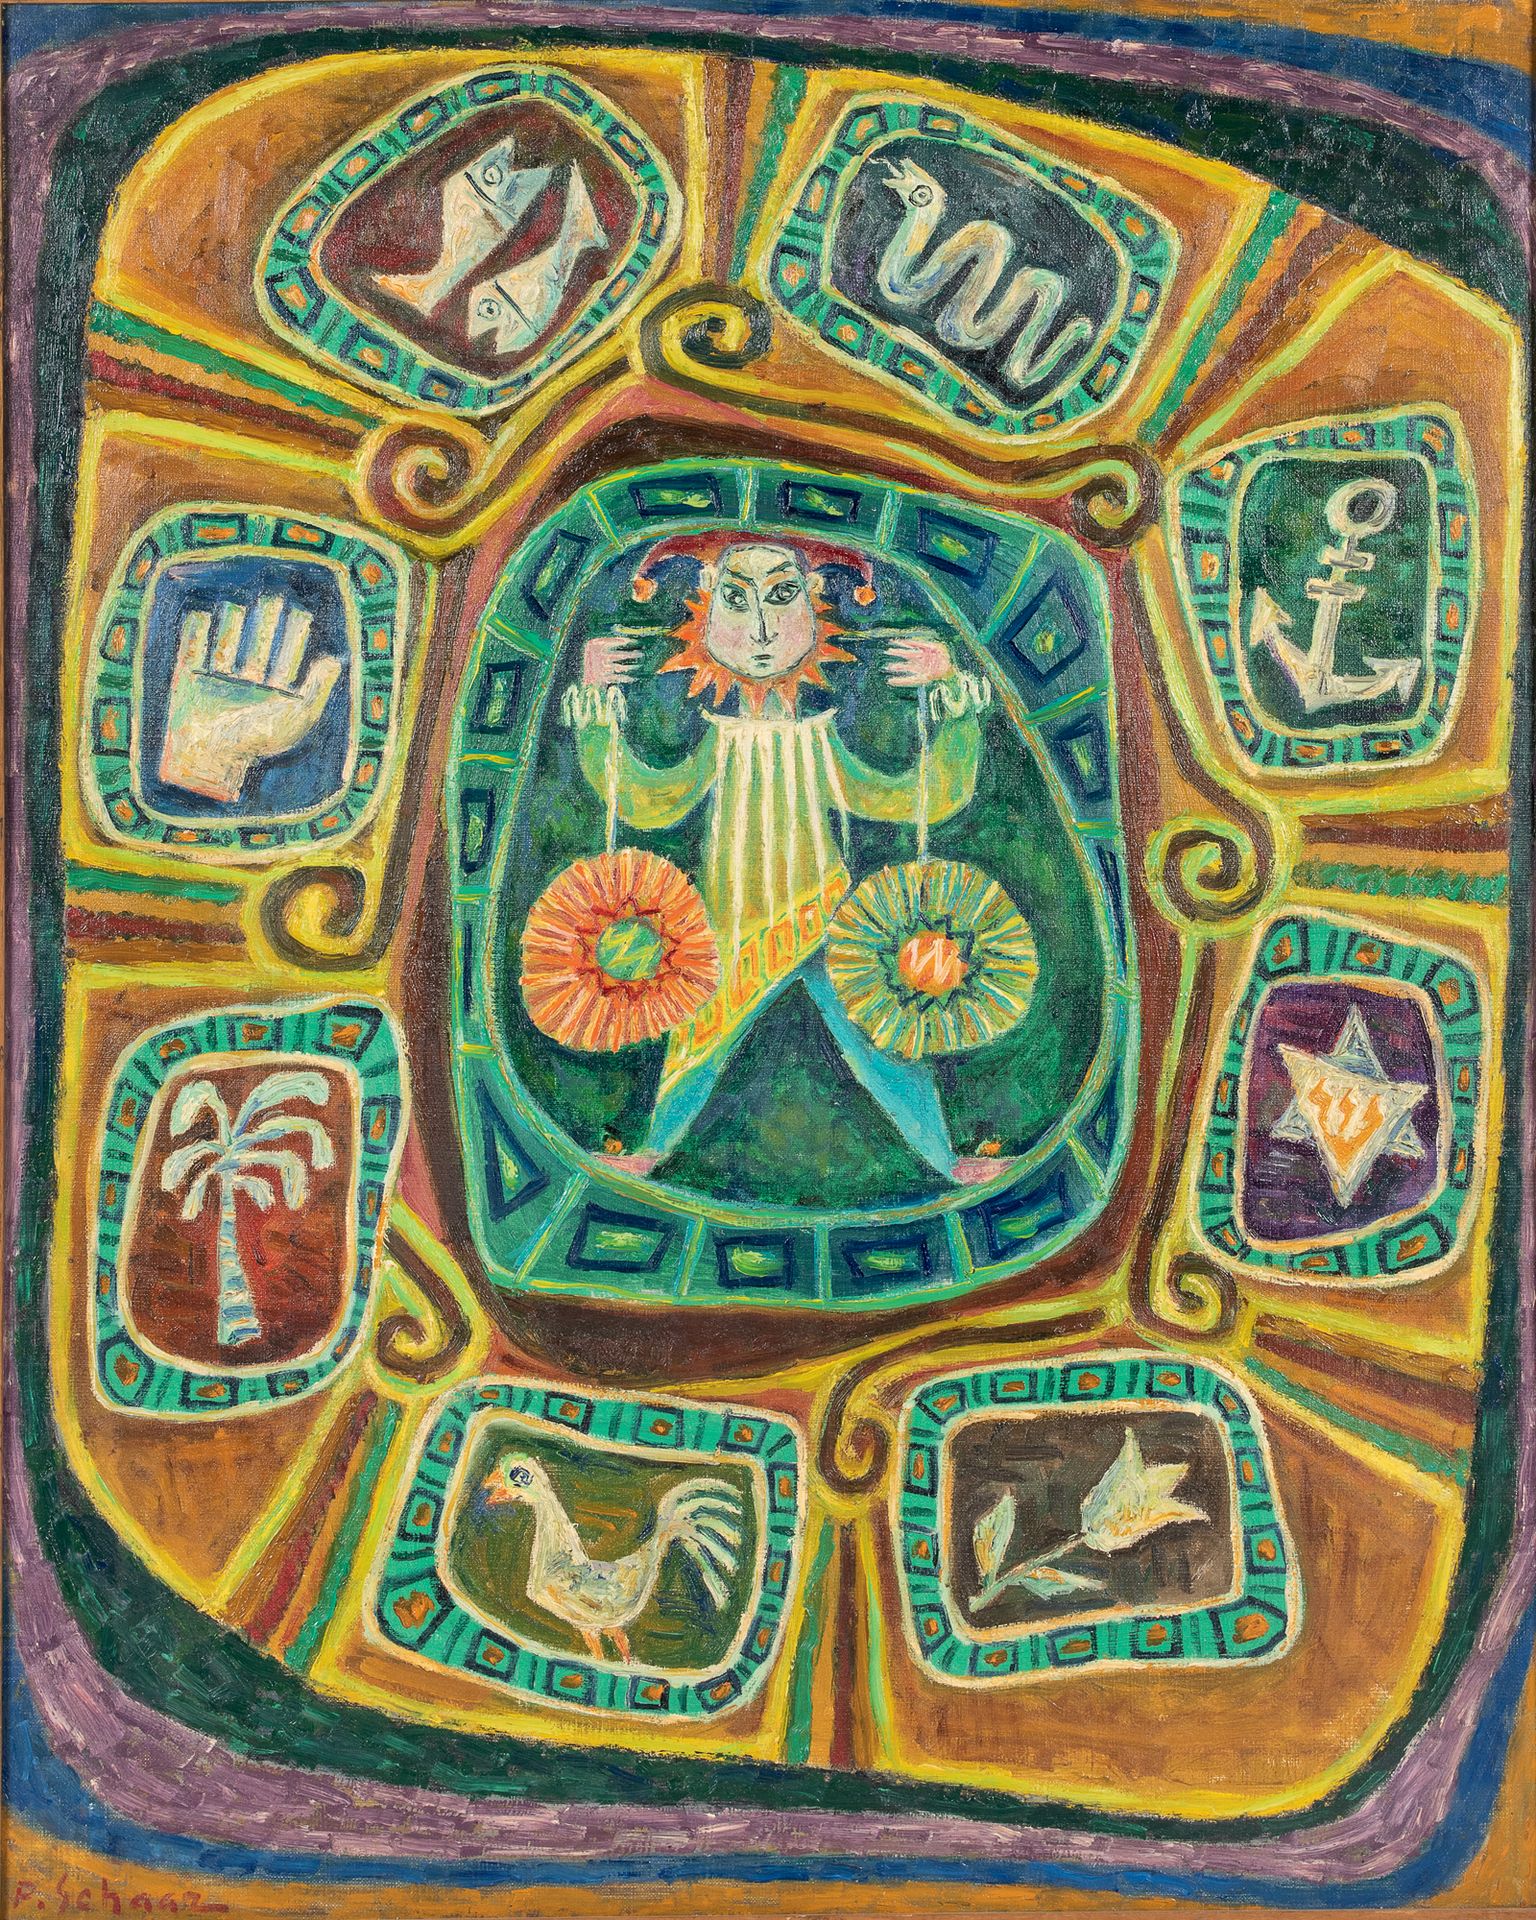 Pinchas SCHAAR (1923-1996) - 有人物的构图
布面油画，左下角签名 81 x 65 cm